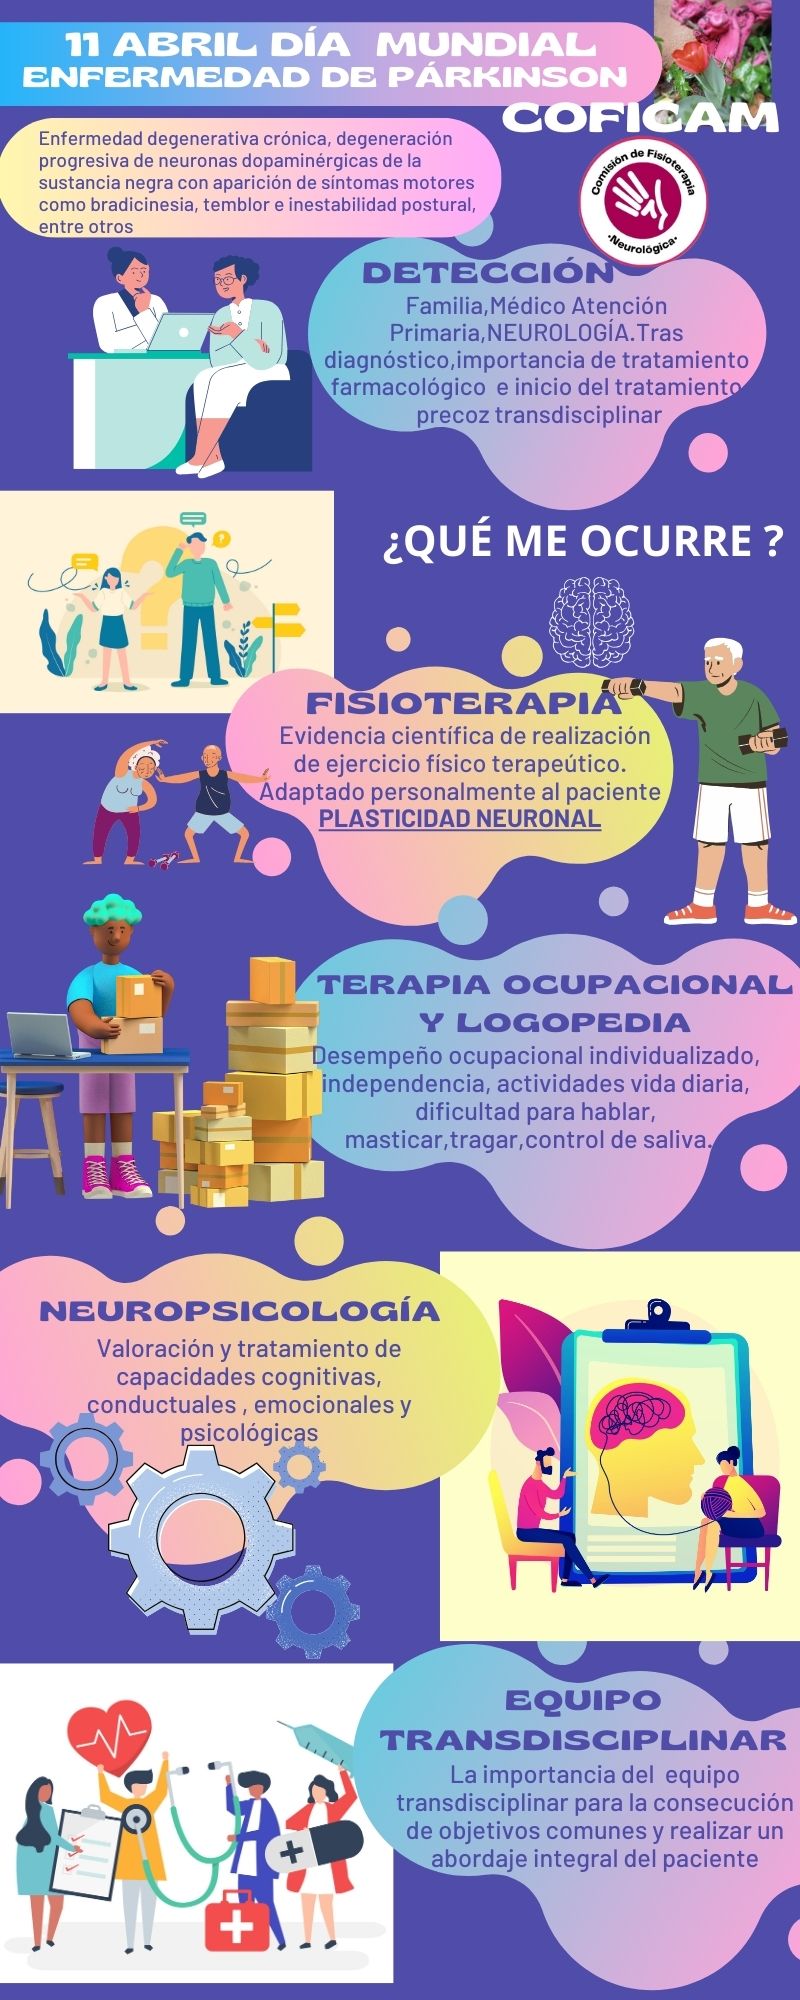 Dia Mundial del Parkinson